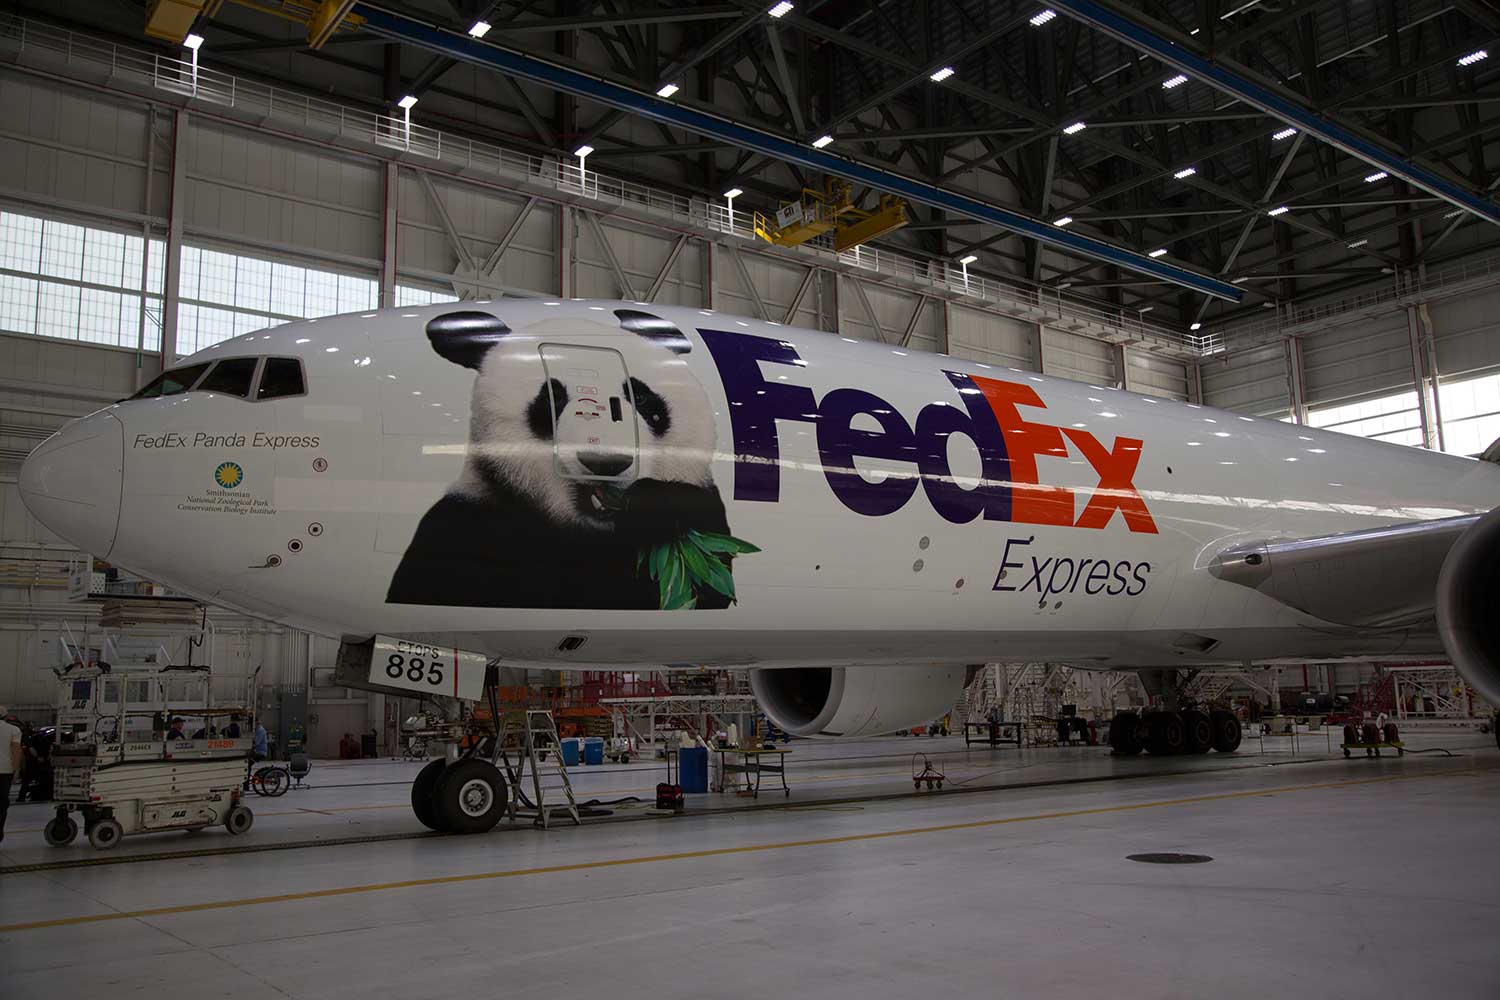 Fedex panda express 777